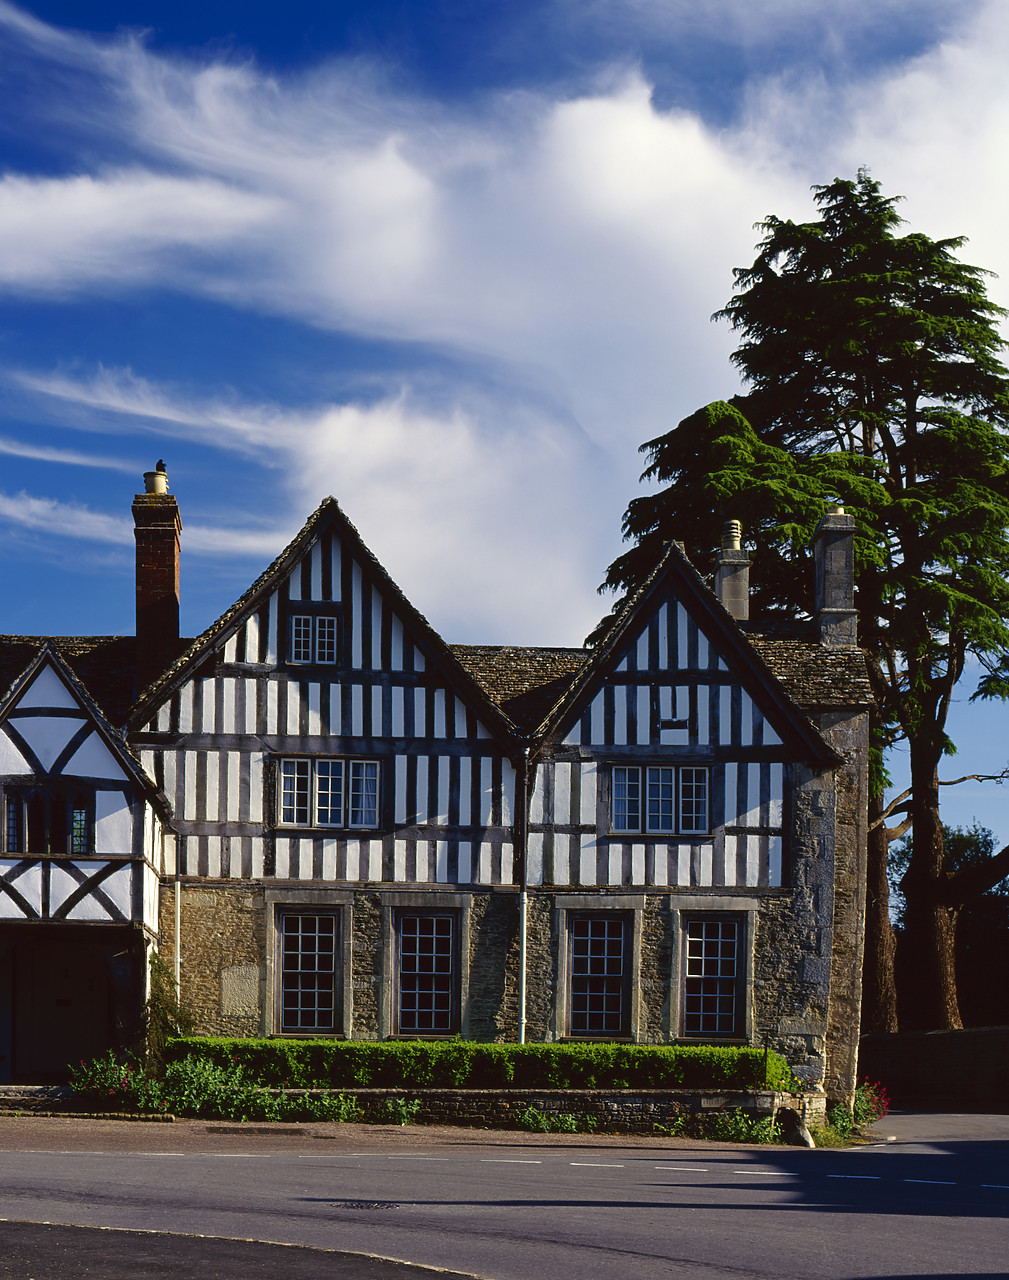 #010631-3 - Half-timbered Building, Lacock, Wiltshire, England